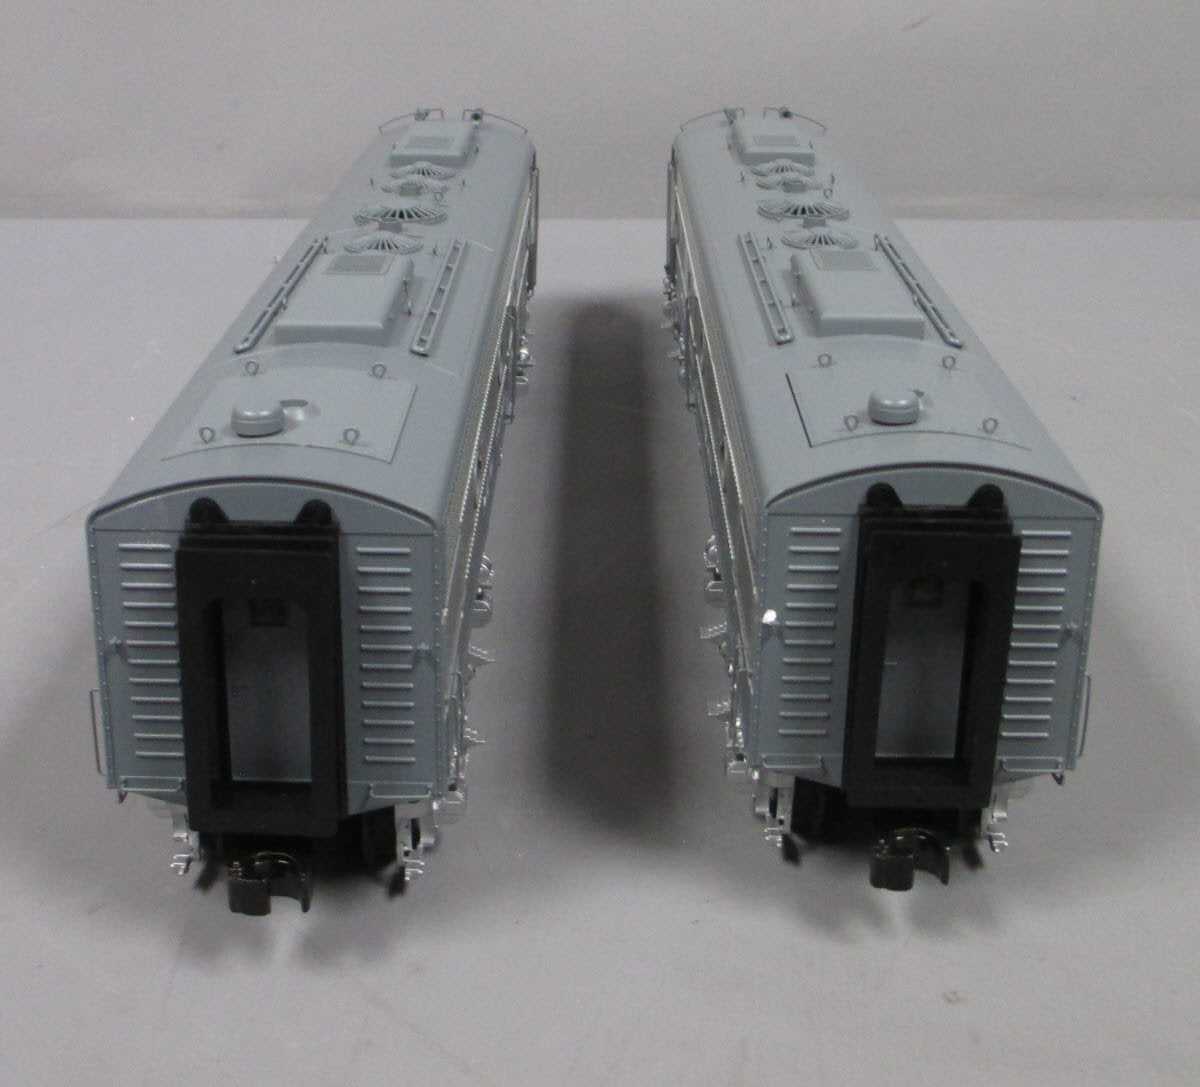 Lionel 6-84088 LEGACY New York Central AA E8 Diesel Locomotive Set #4036/4037